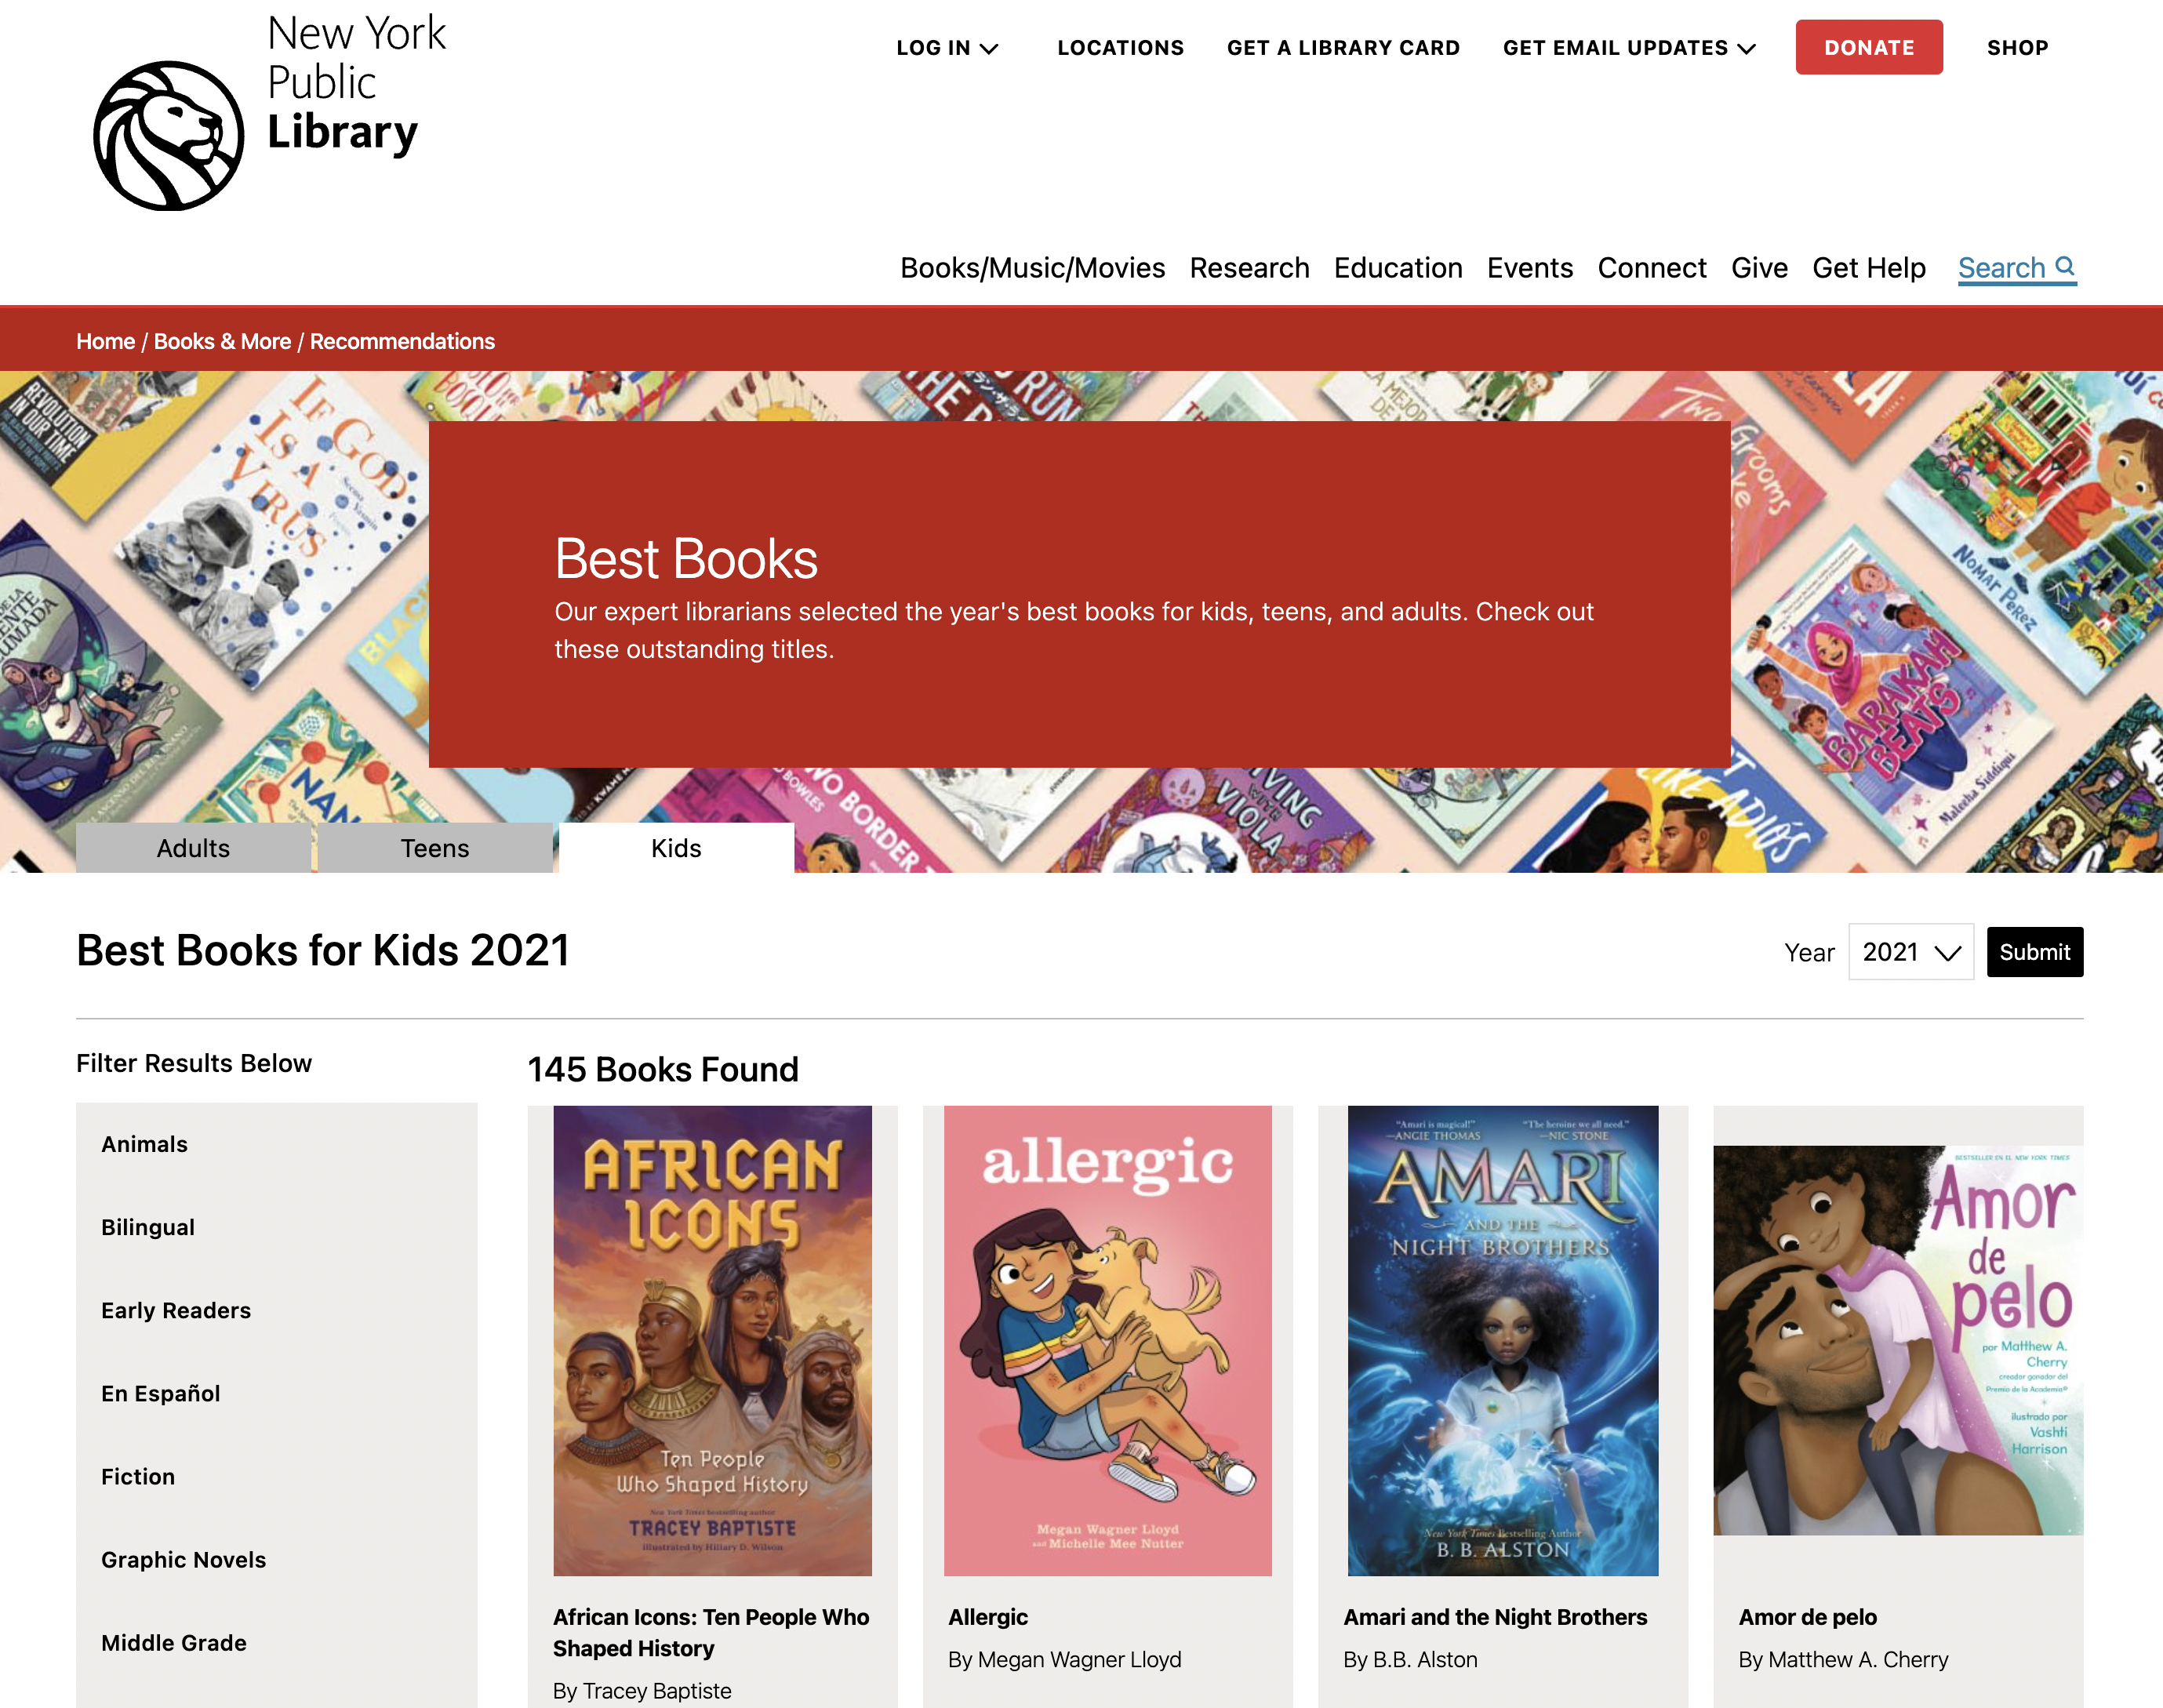 New York Public Library Best Books for Kids